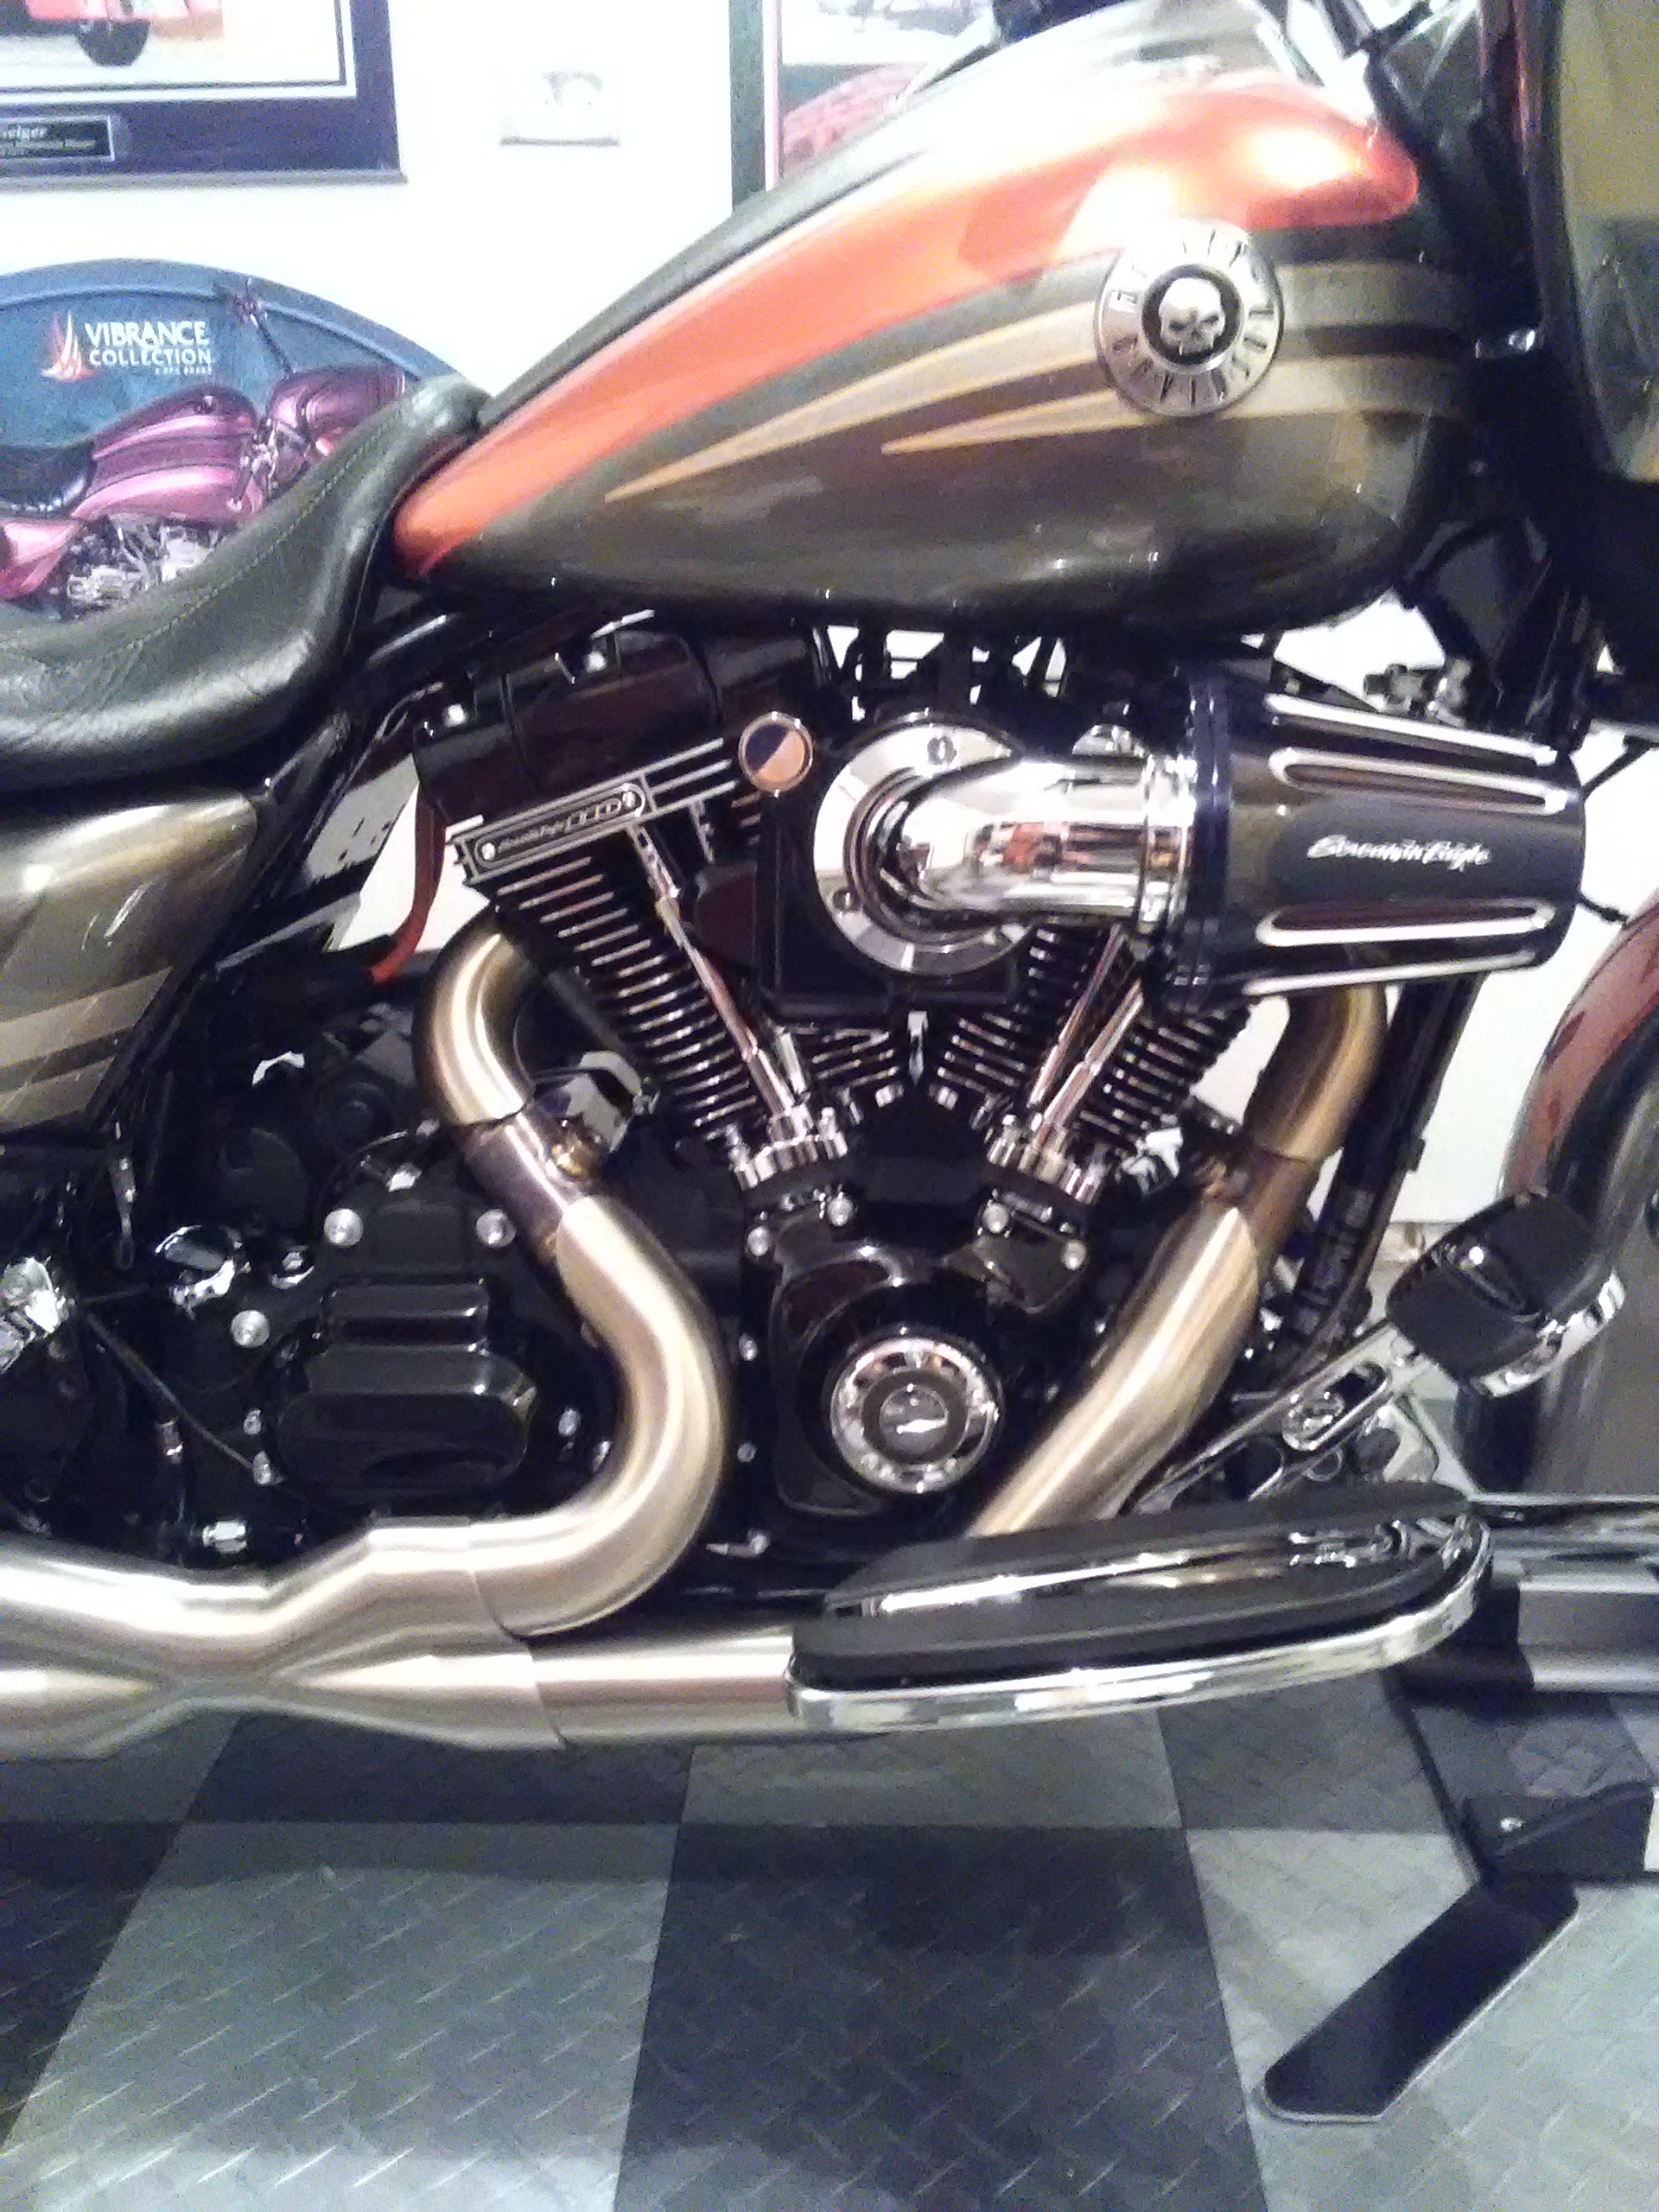 2013 CVO Road Glide - Harley Davidson Forums